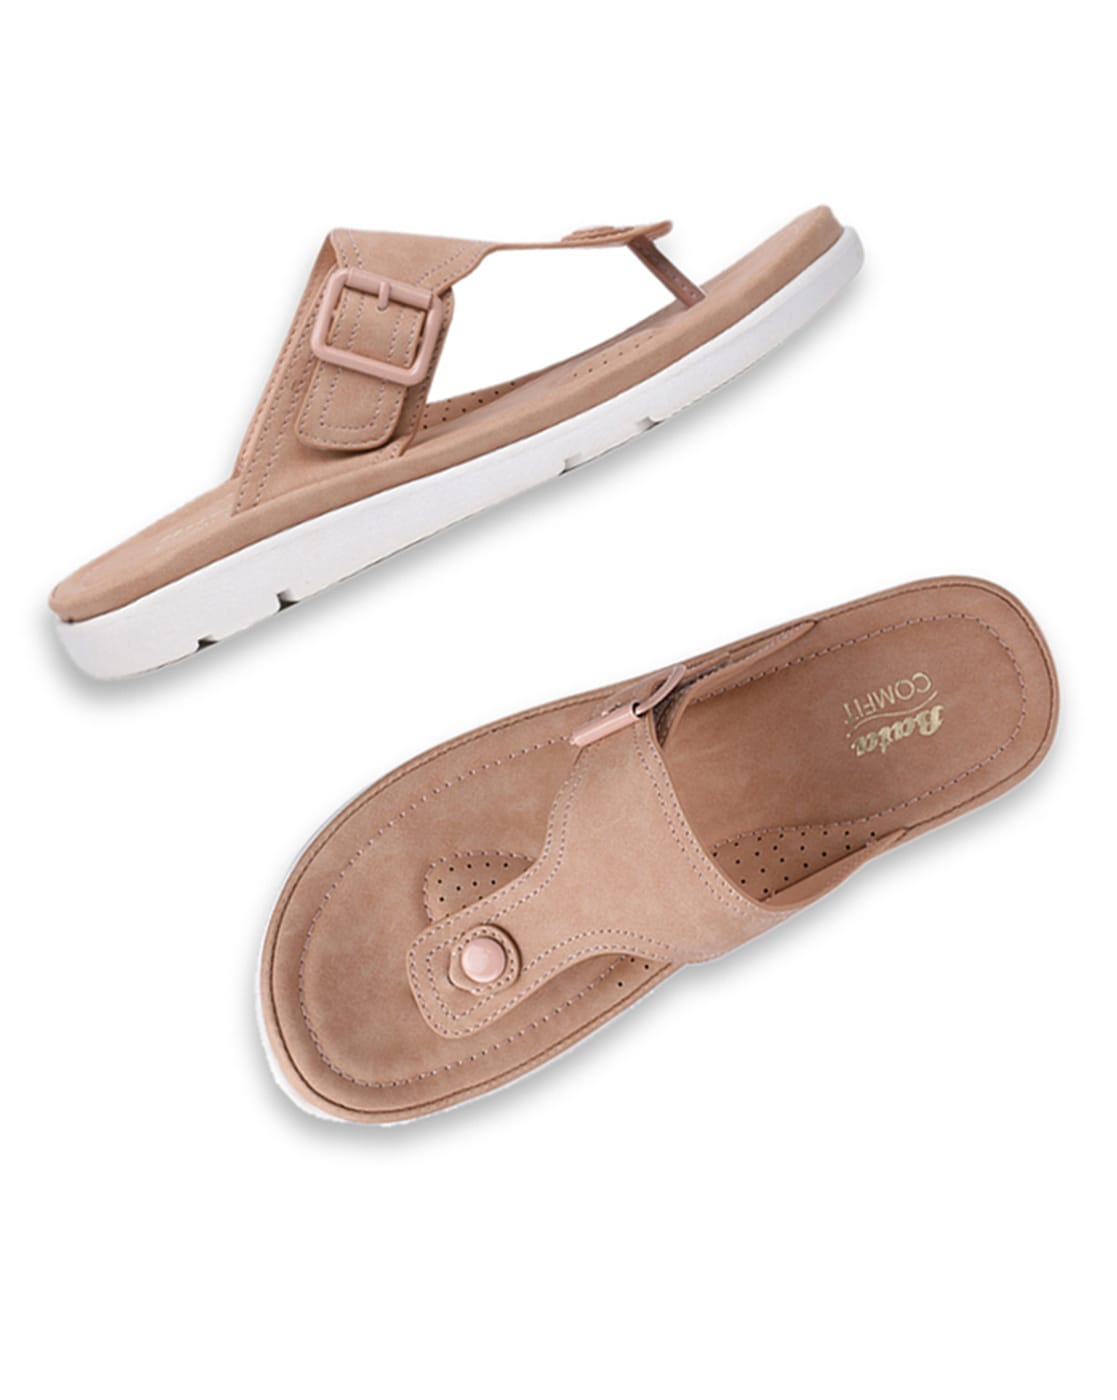 Bata Sandals for Women - Poshmark-sgquangbinhtourist.com.vn